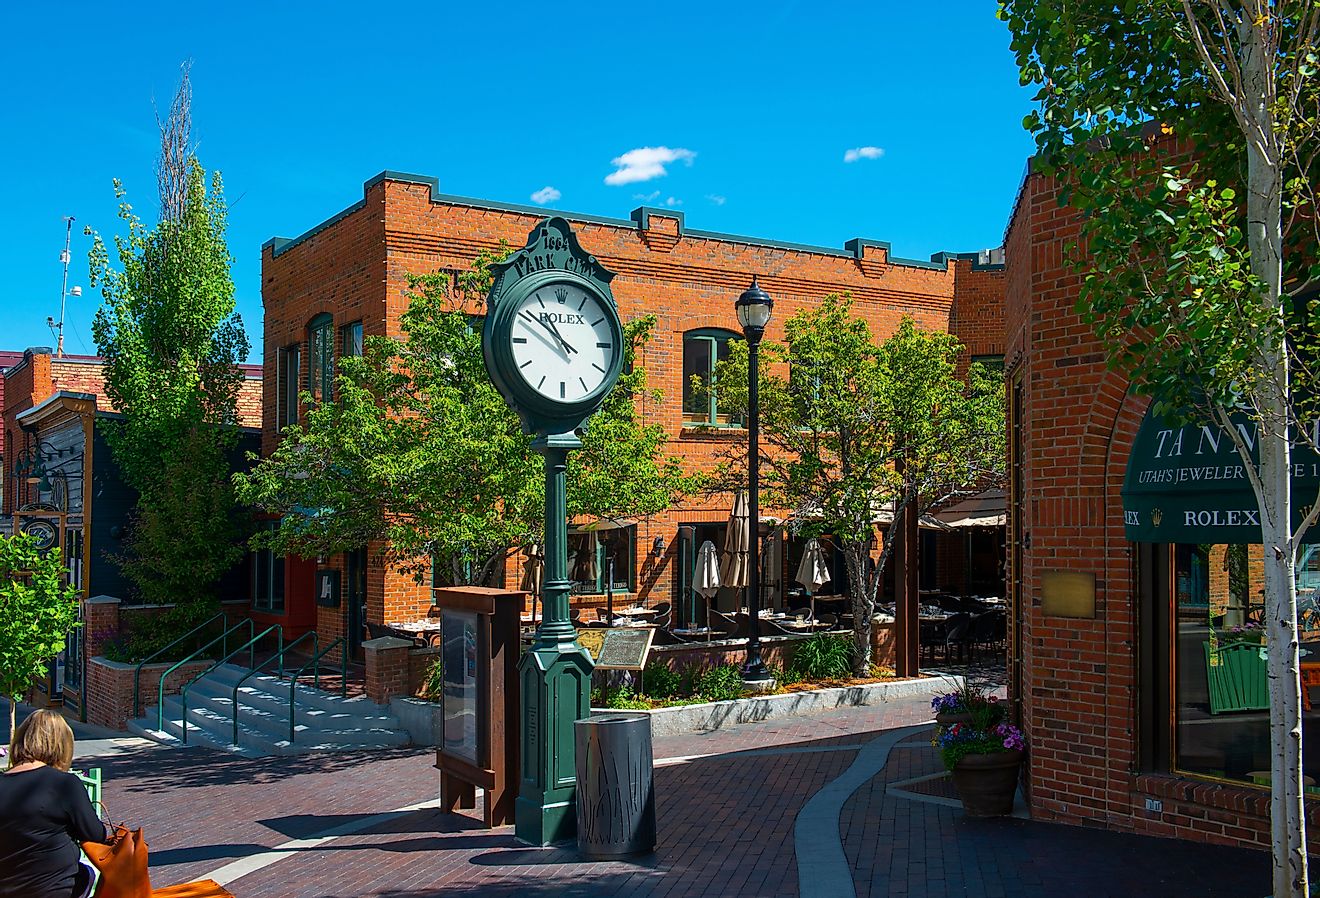 Historic Park City street clock in historic downtown Park City, Utah. Image credit Wangkun Jia via Shutterstock